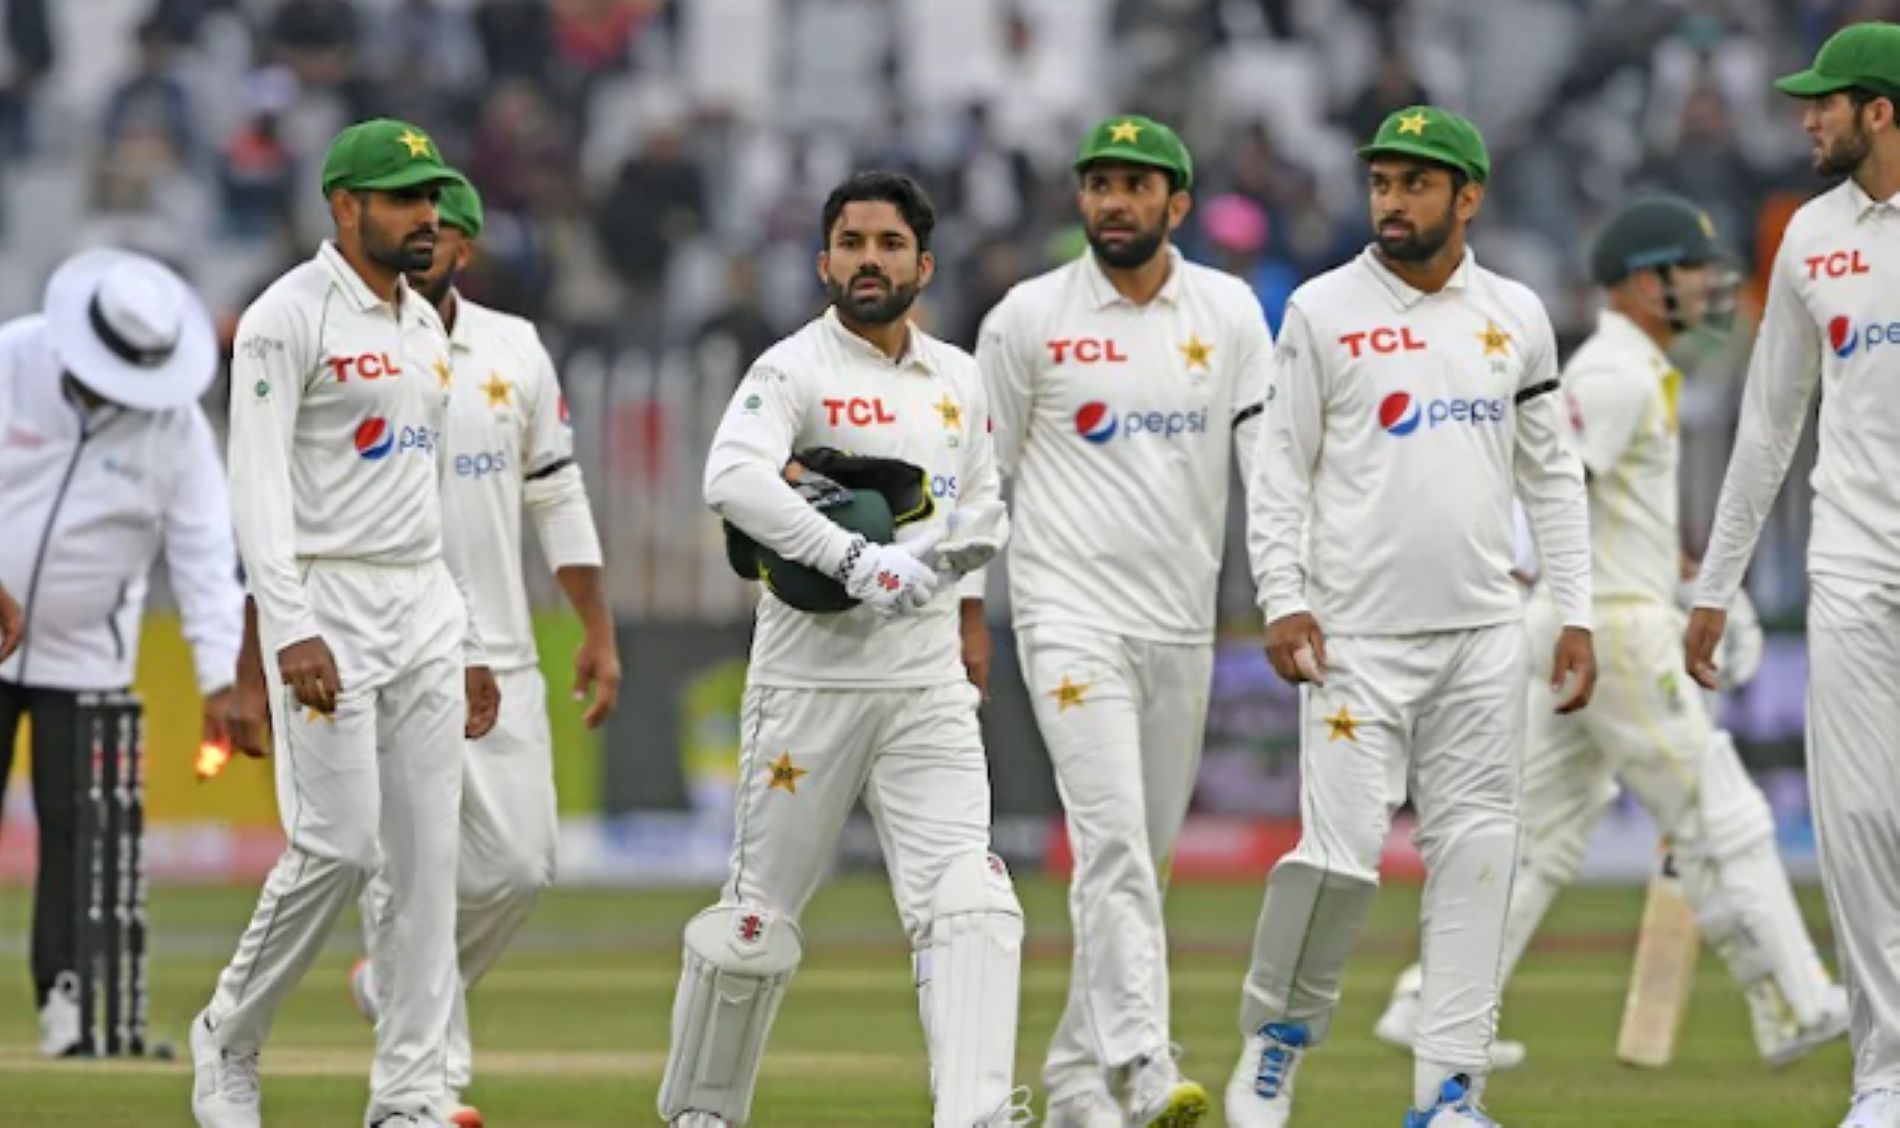 Pakistan has struggled against Australia in Tests.